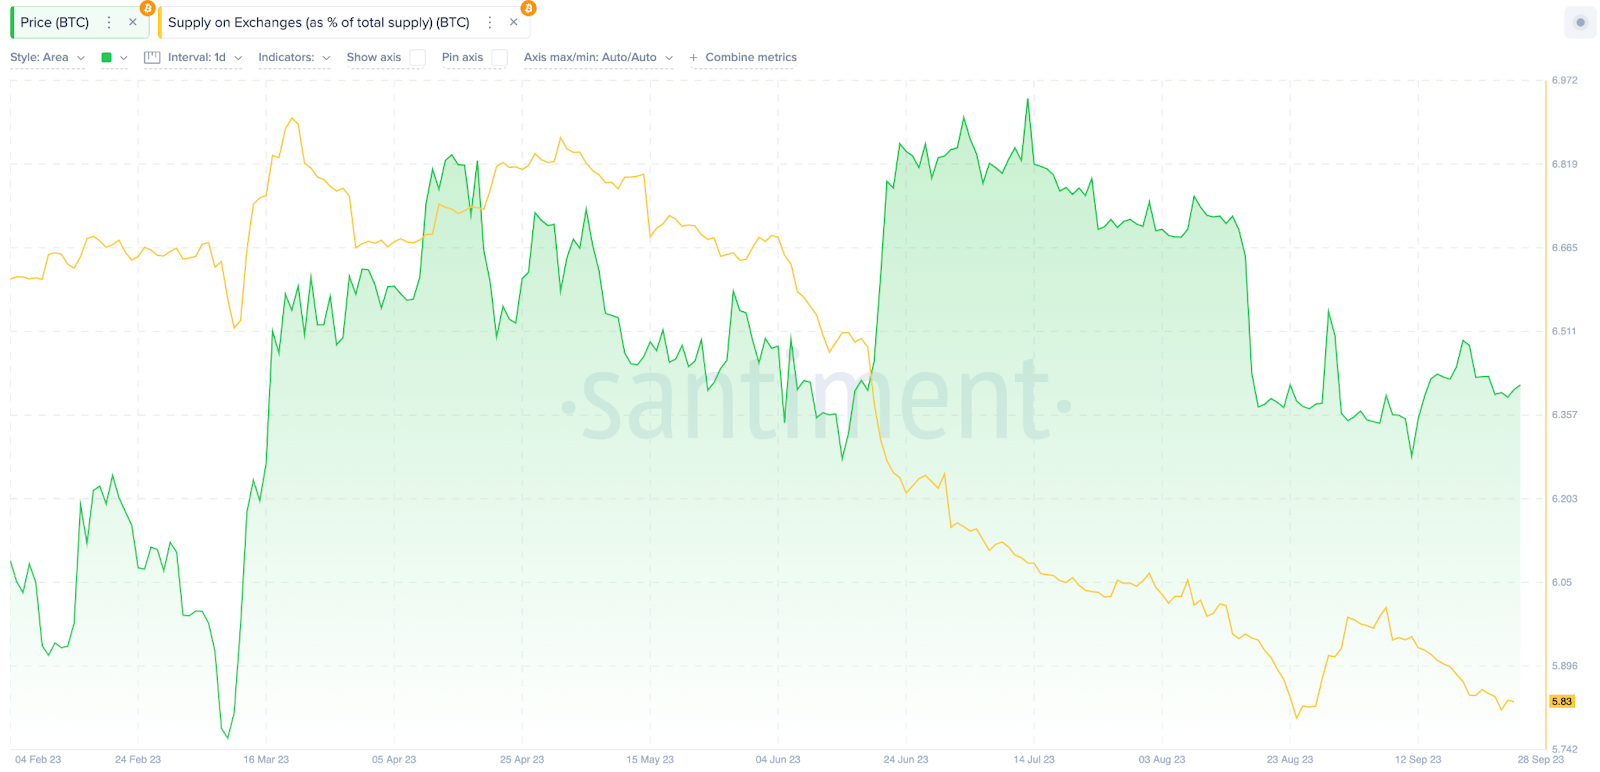 Bitcoin Price vs % Supply on Exchange